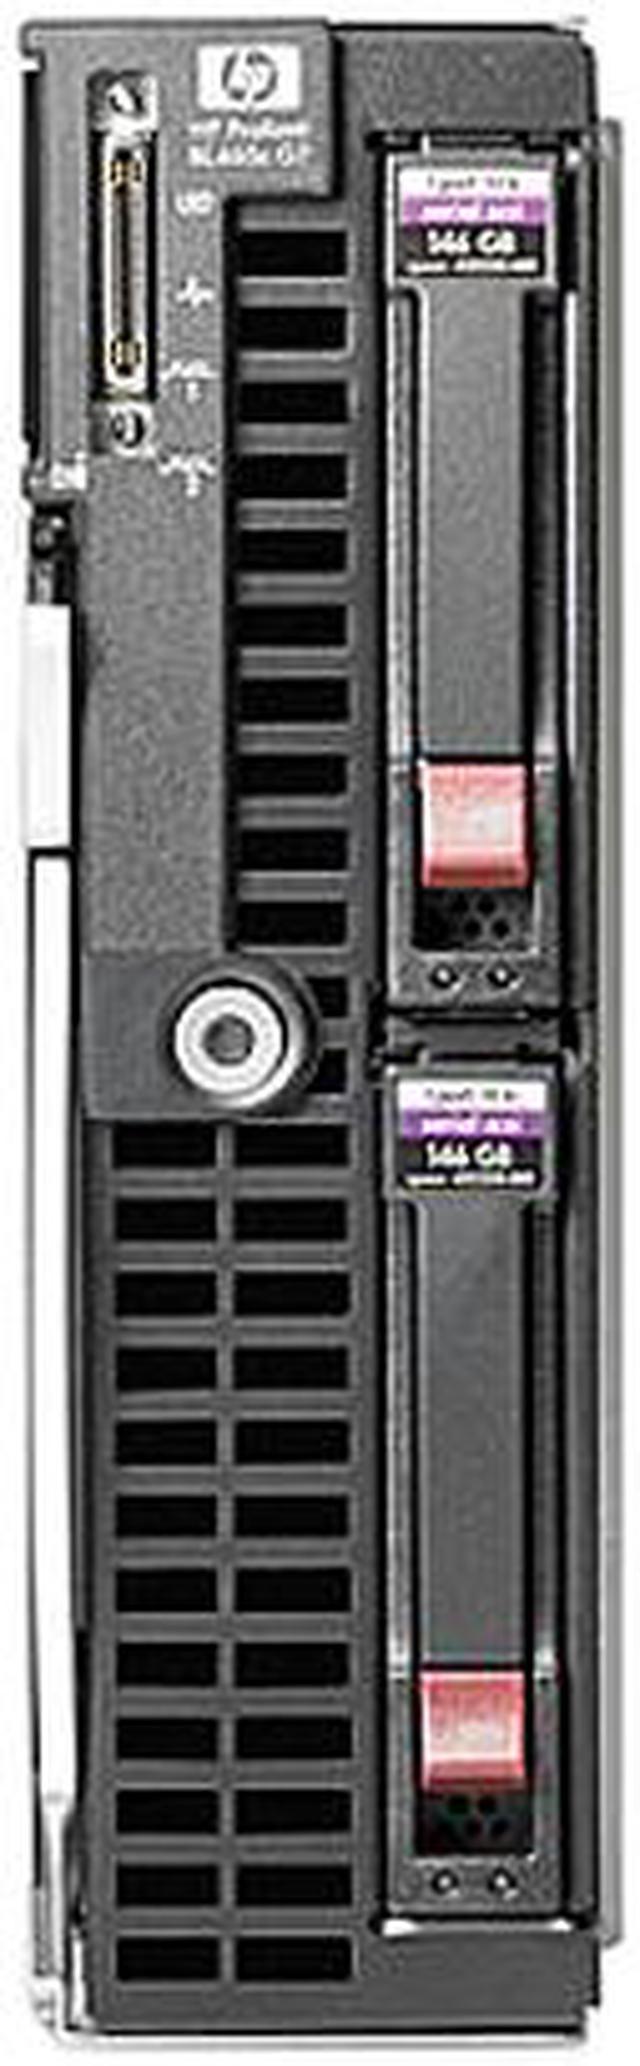 HP ProLiant BL460c G7 Blade Server System 2 x Intel Xeon X5650 2.66GHz  6C/12T 16GB (2 x 8GB) DDR3 No Hard Drive 630442-S01